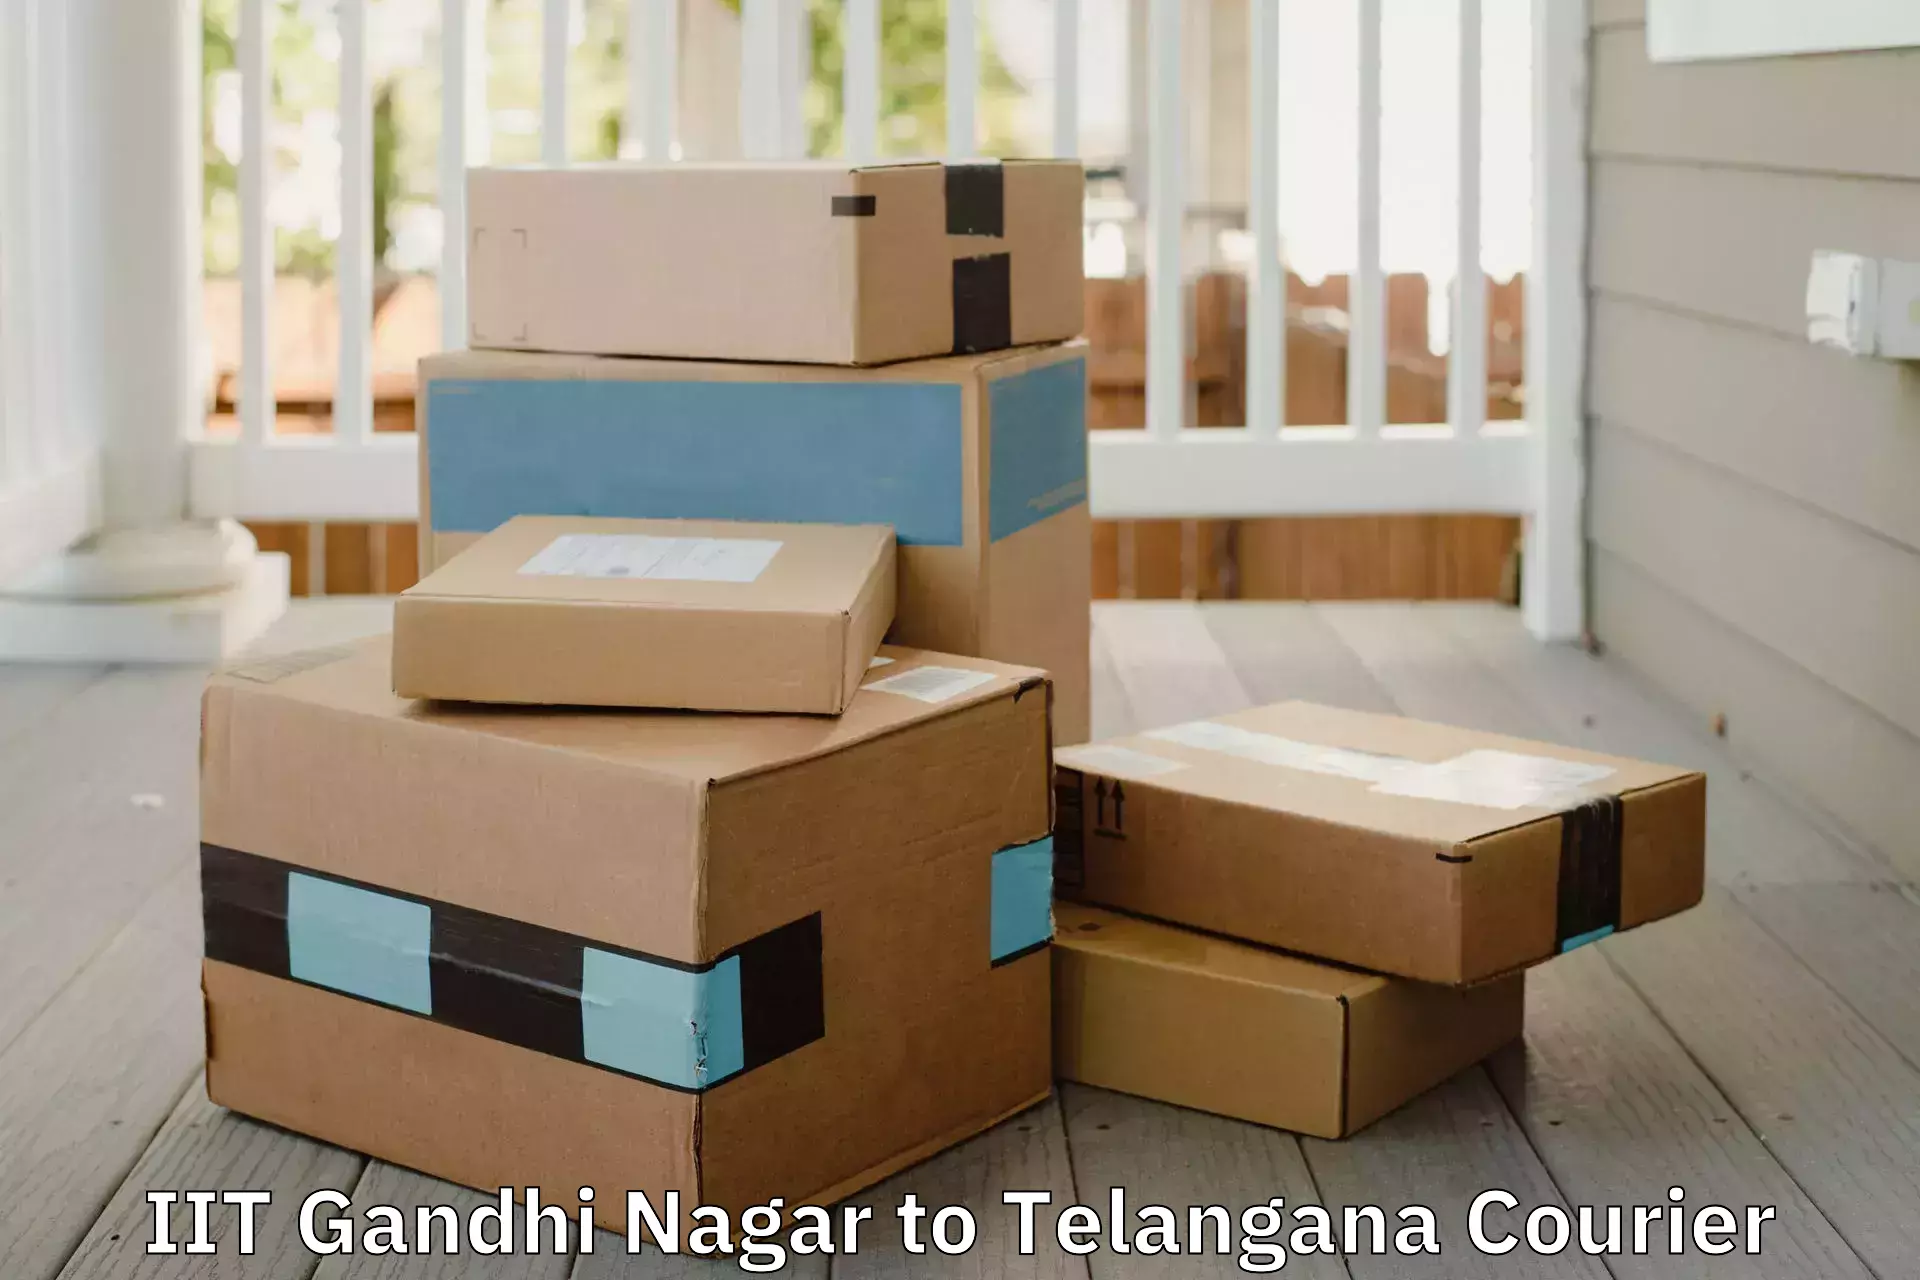 Household goods movers and packers in IIT Gandhi Nagar to Telangana